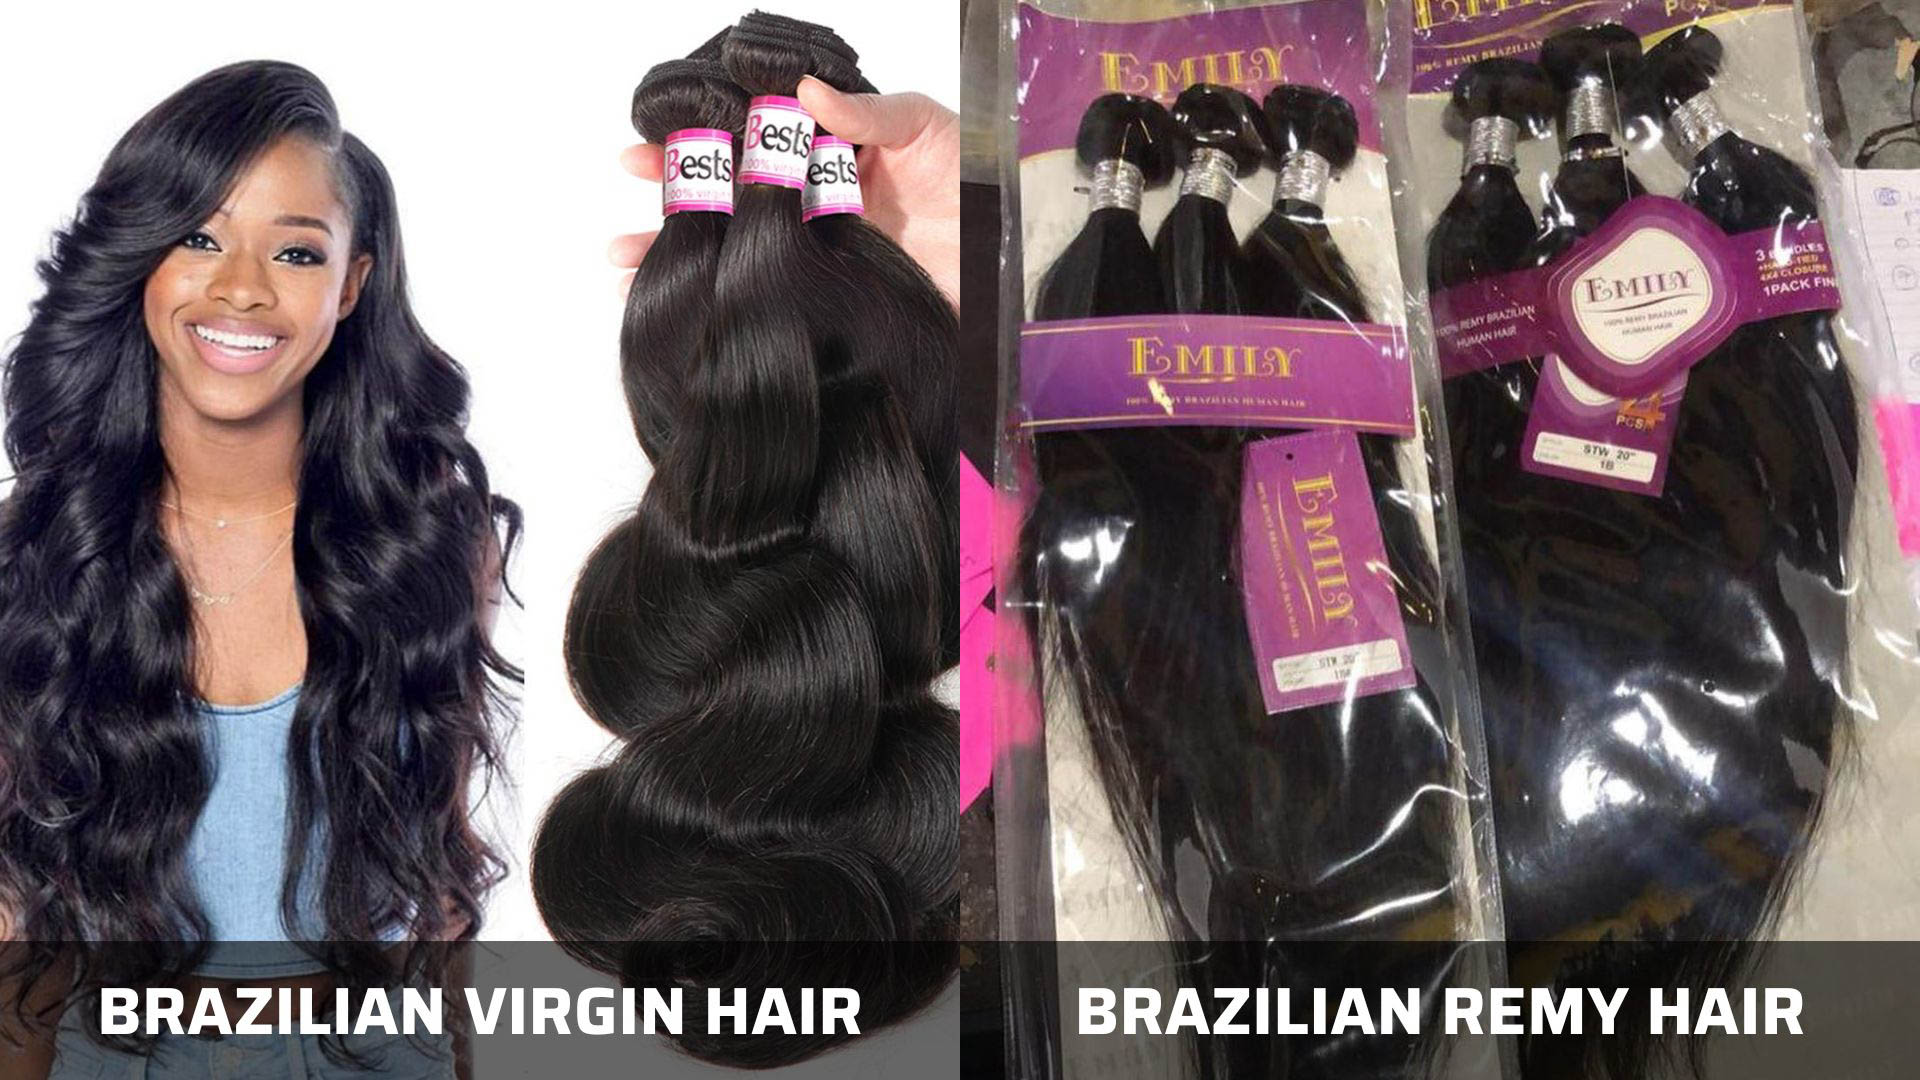 Brazilian virgin hair vs Brazilian remy hair are popular hair types from Brazilian hair vendors